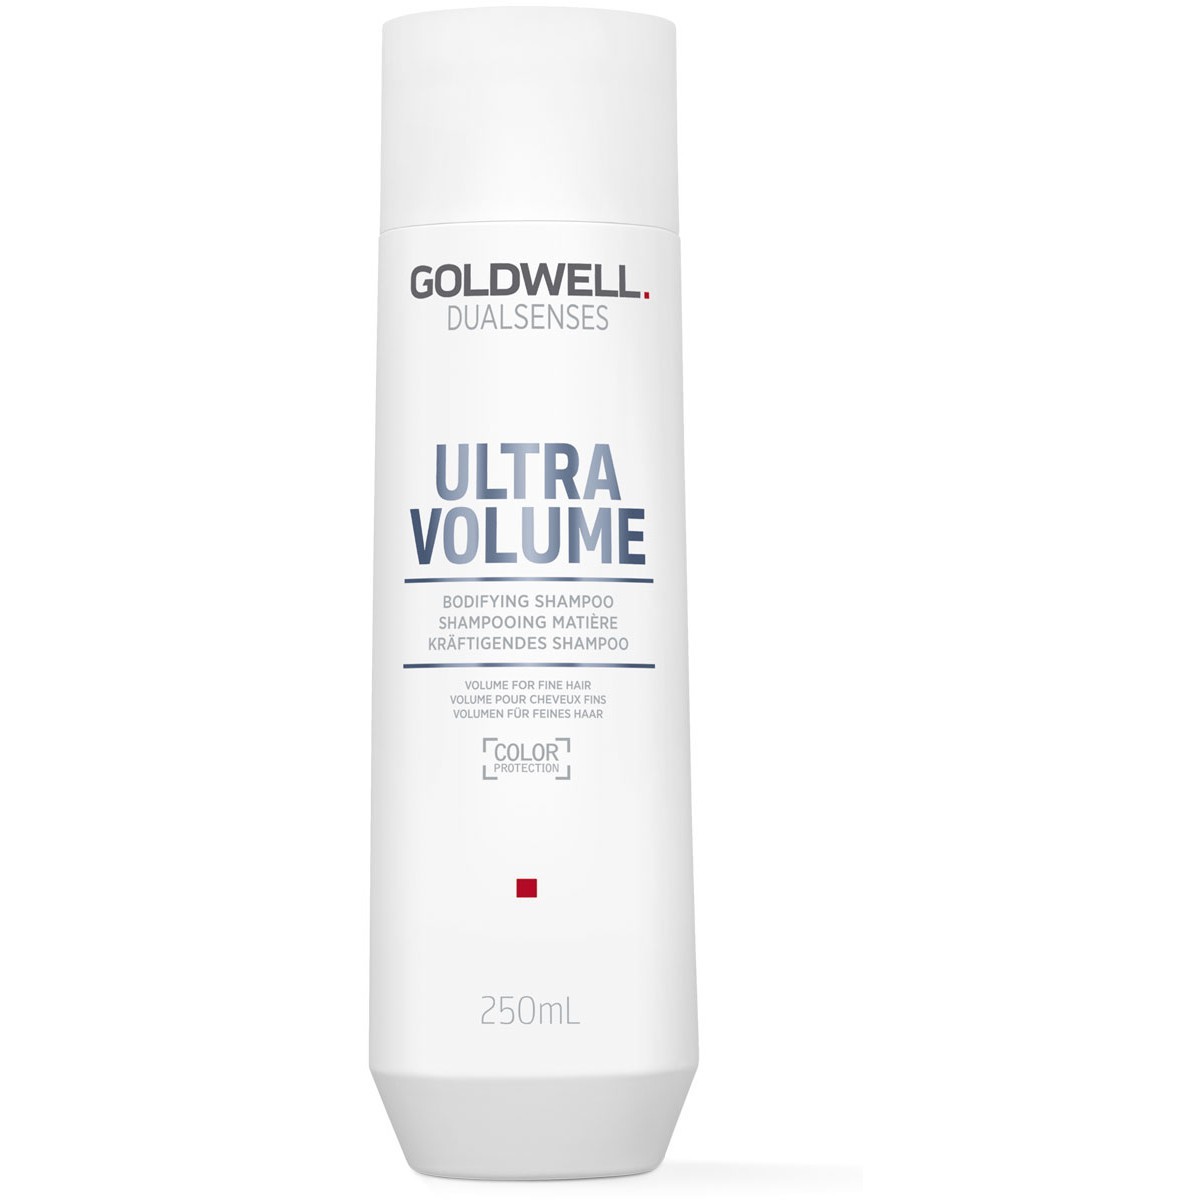 Goldwell Dualsenses Ultra Volume Bodifying Shampoo 10.1oz/300ml - $27.50